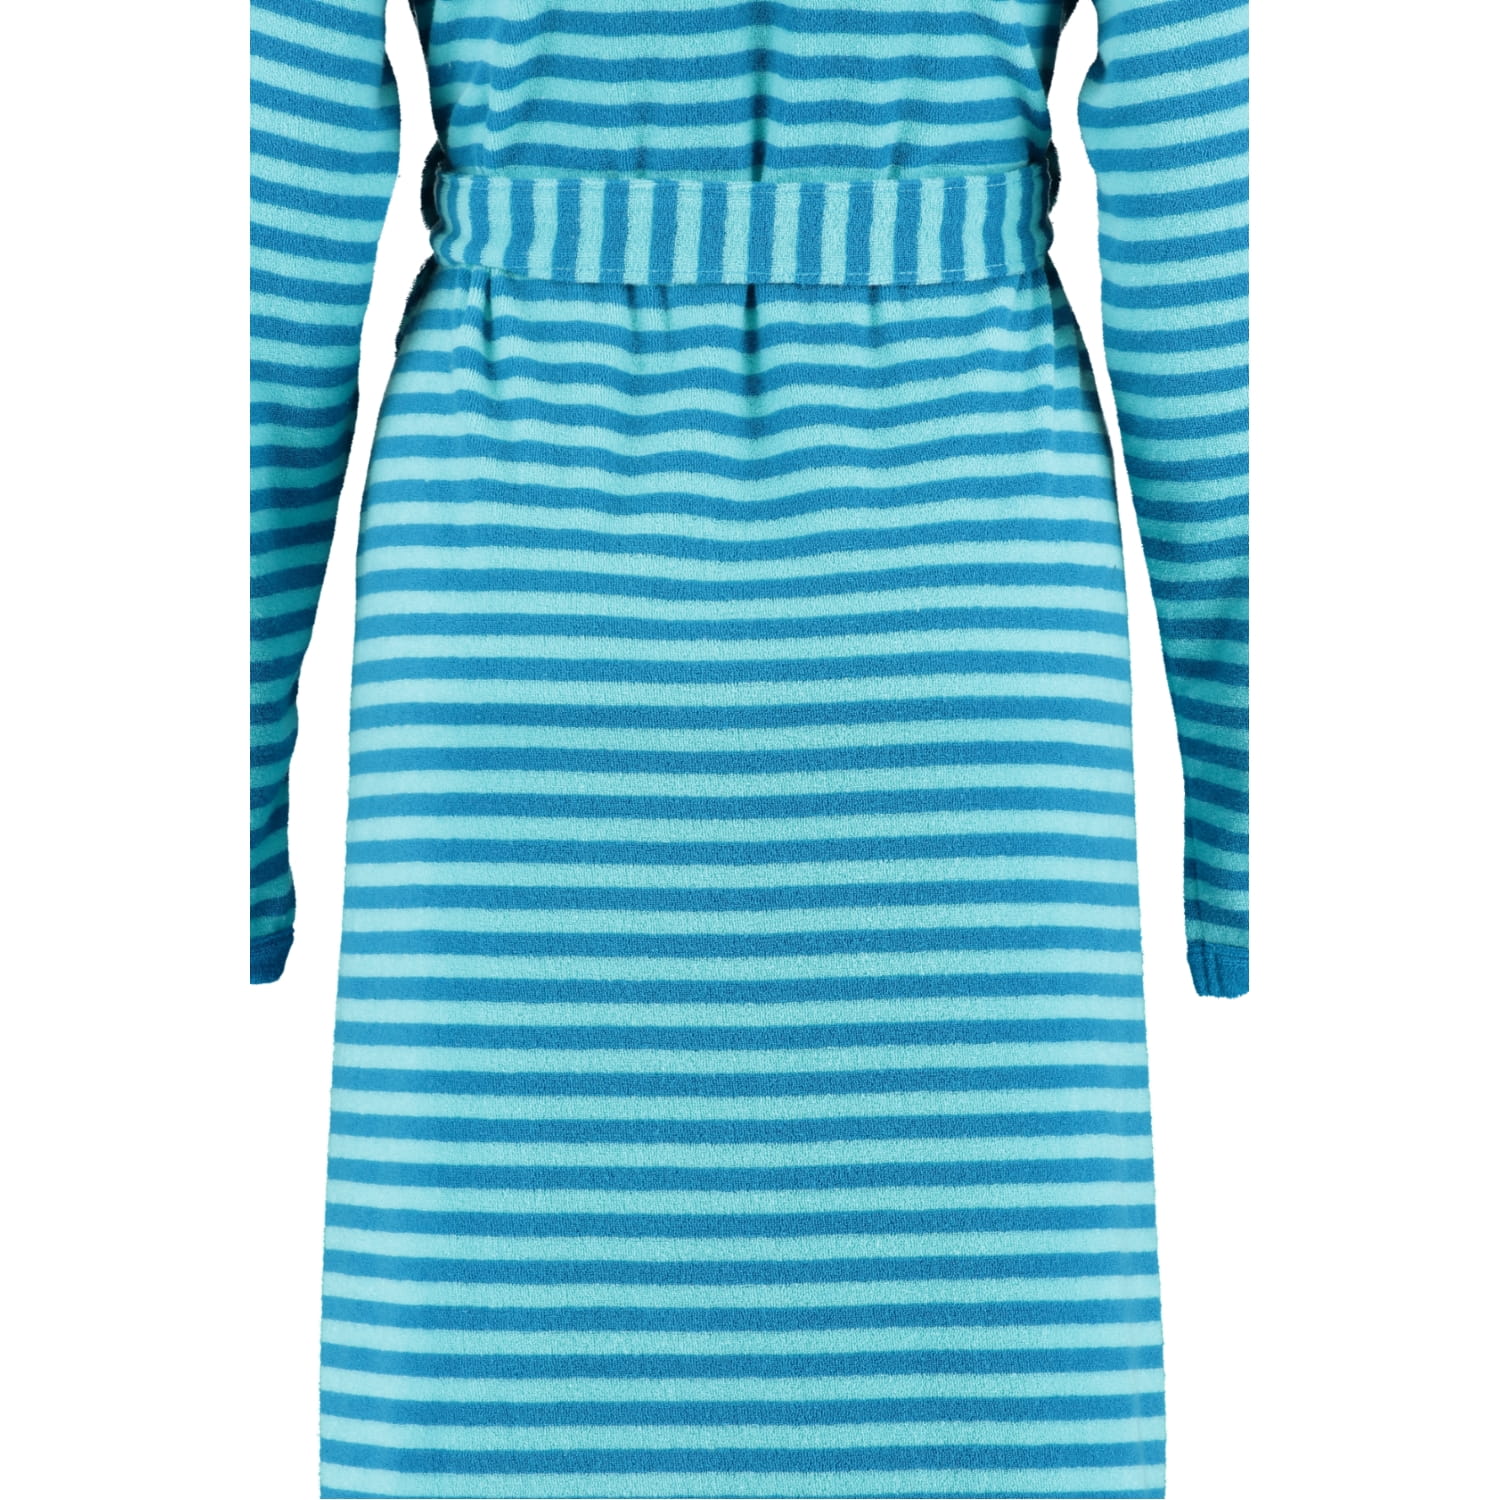 Esprit Damen Bademantel Striped Hoody Kapuze - Farbe: turquoise - 002 L |  Damen | Bademantel